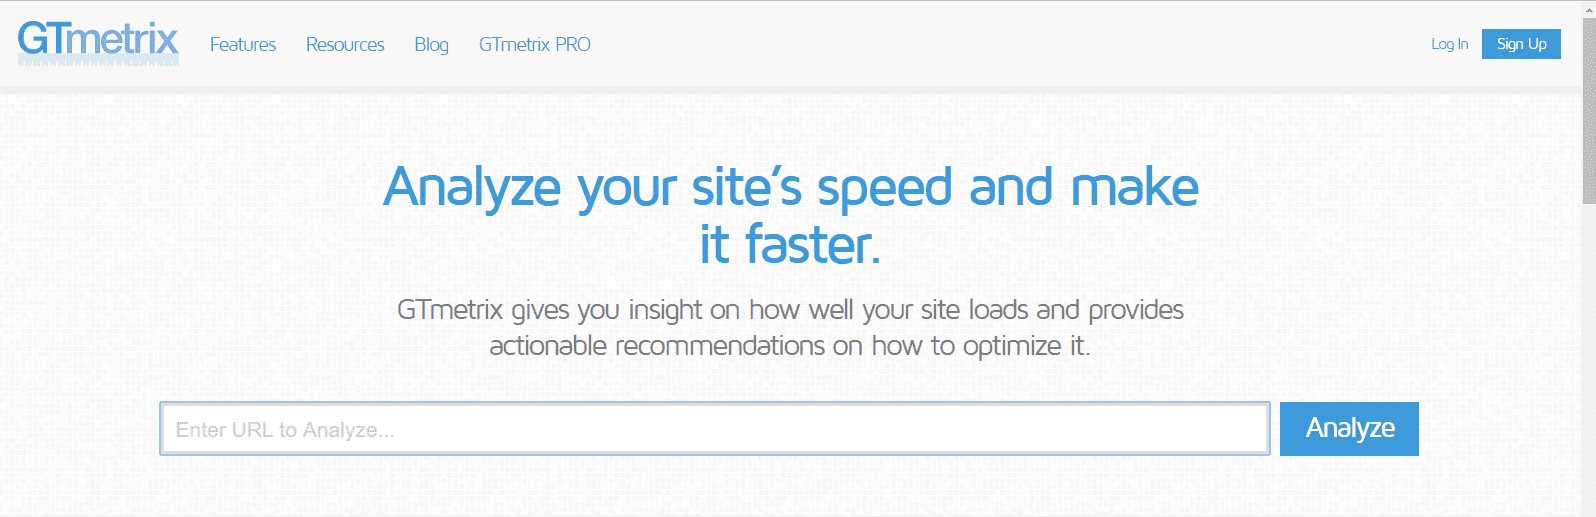 GTmetrix - kiểm tra tốc độ website